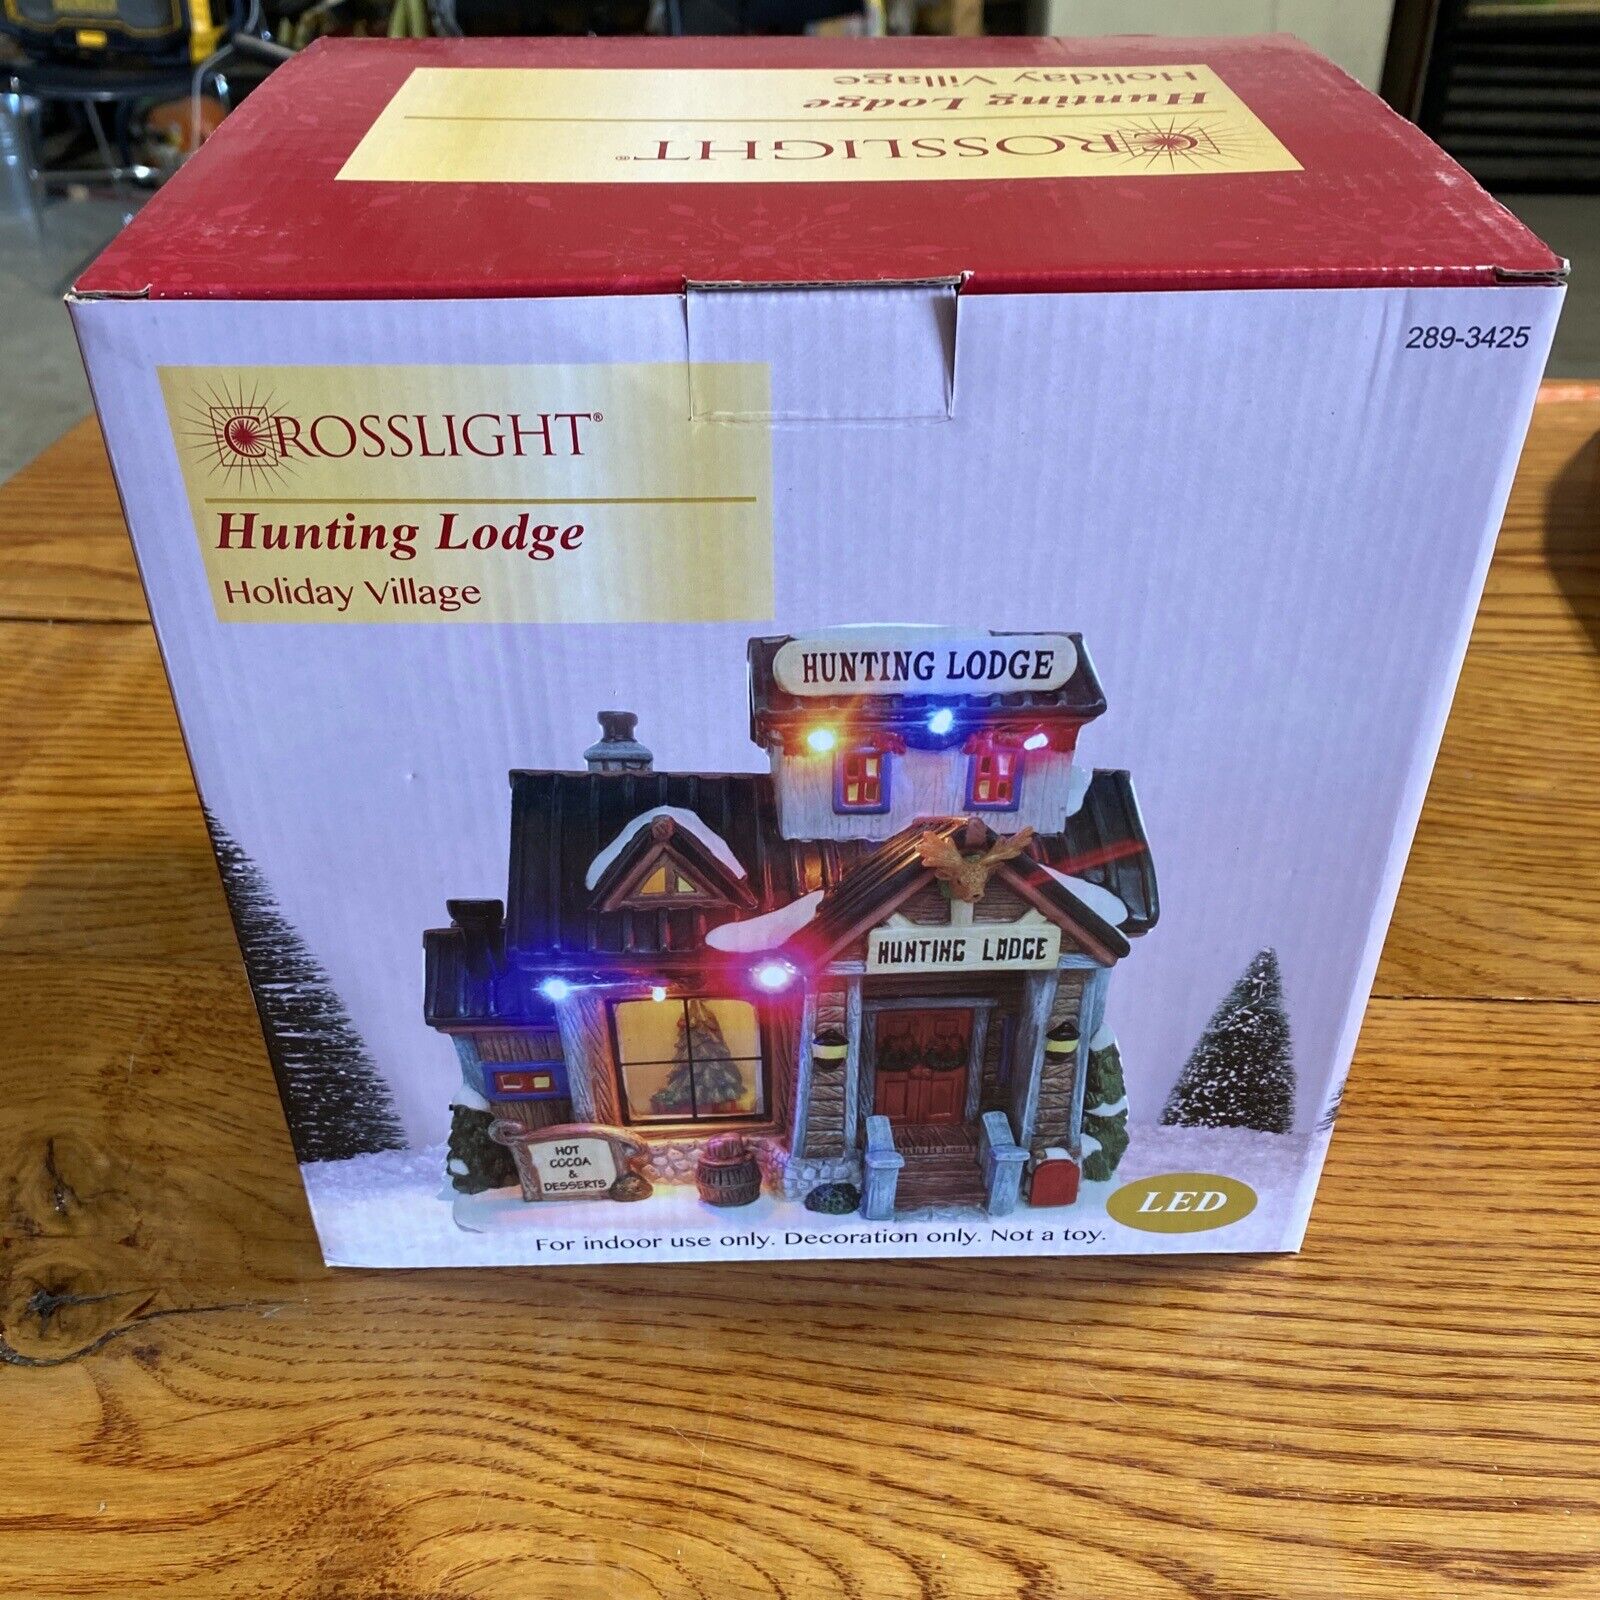 Rosslight Hunting Lodge Holiday Village LED Table Christmas Decoration